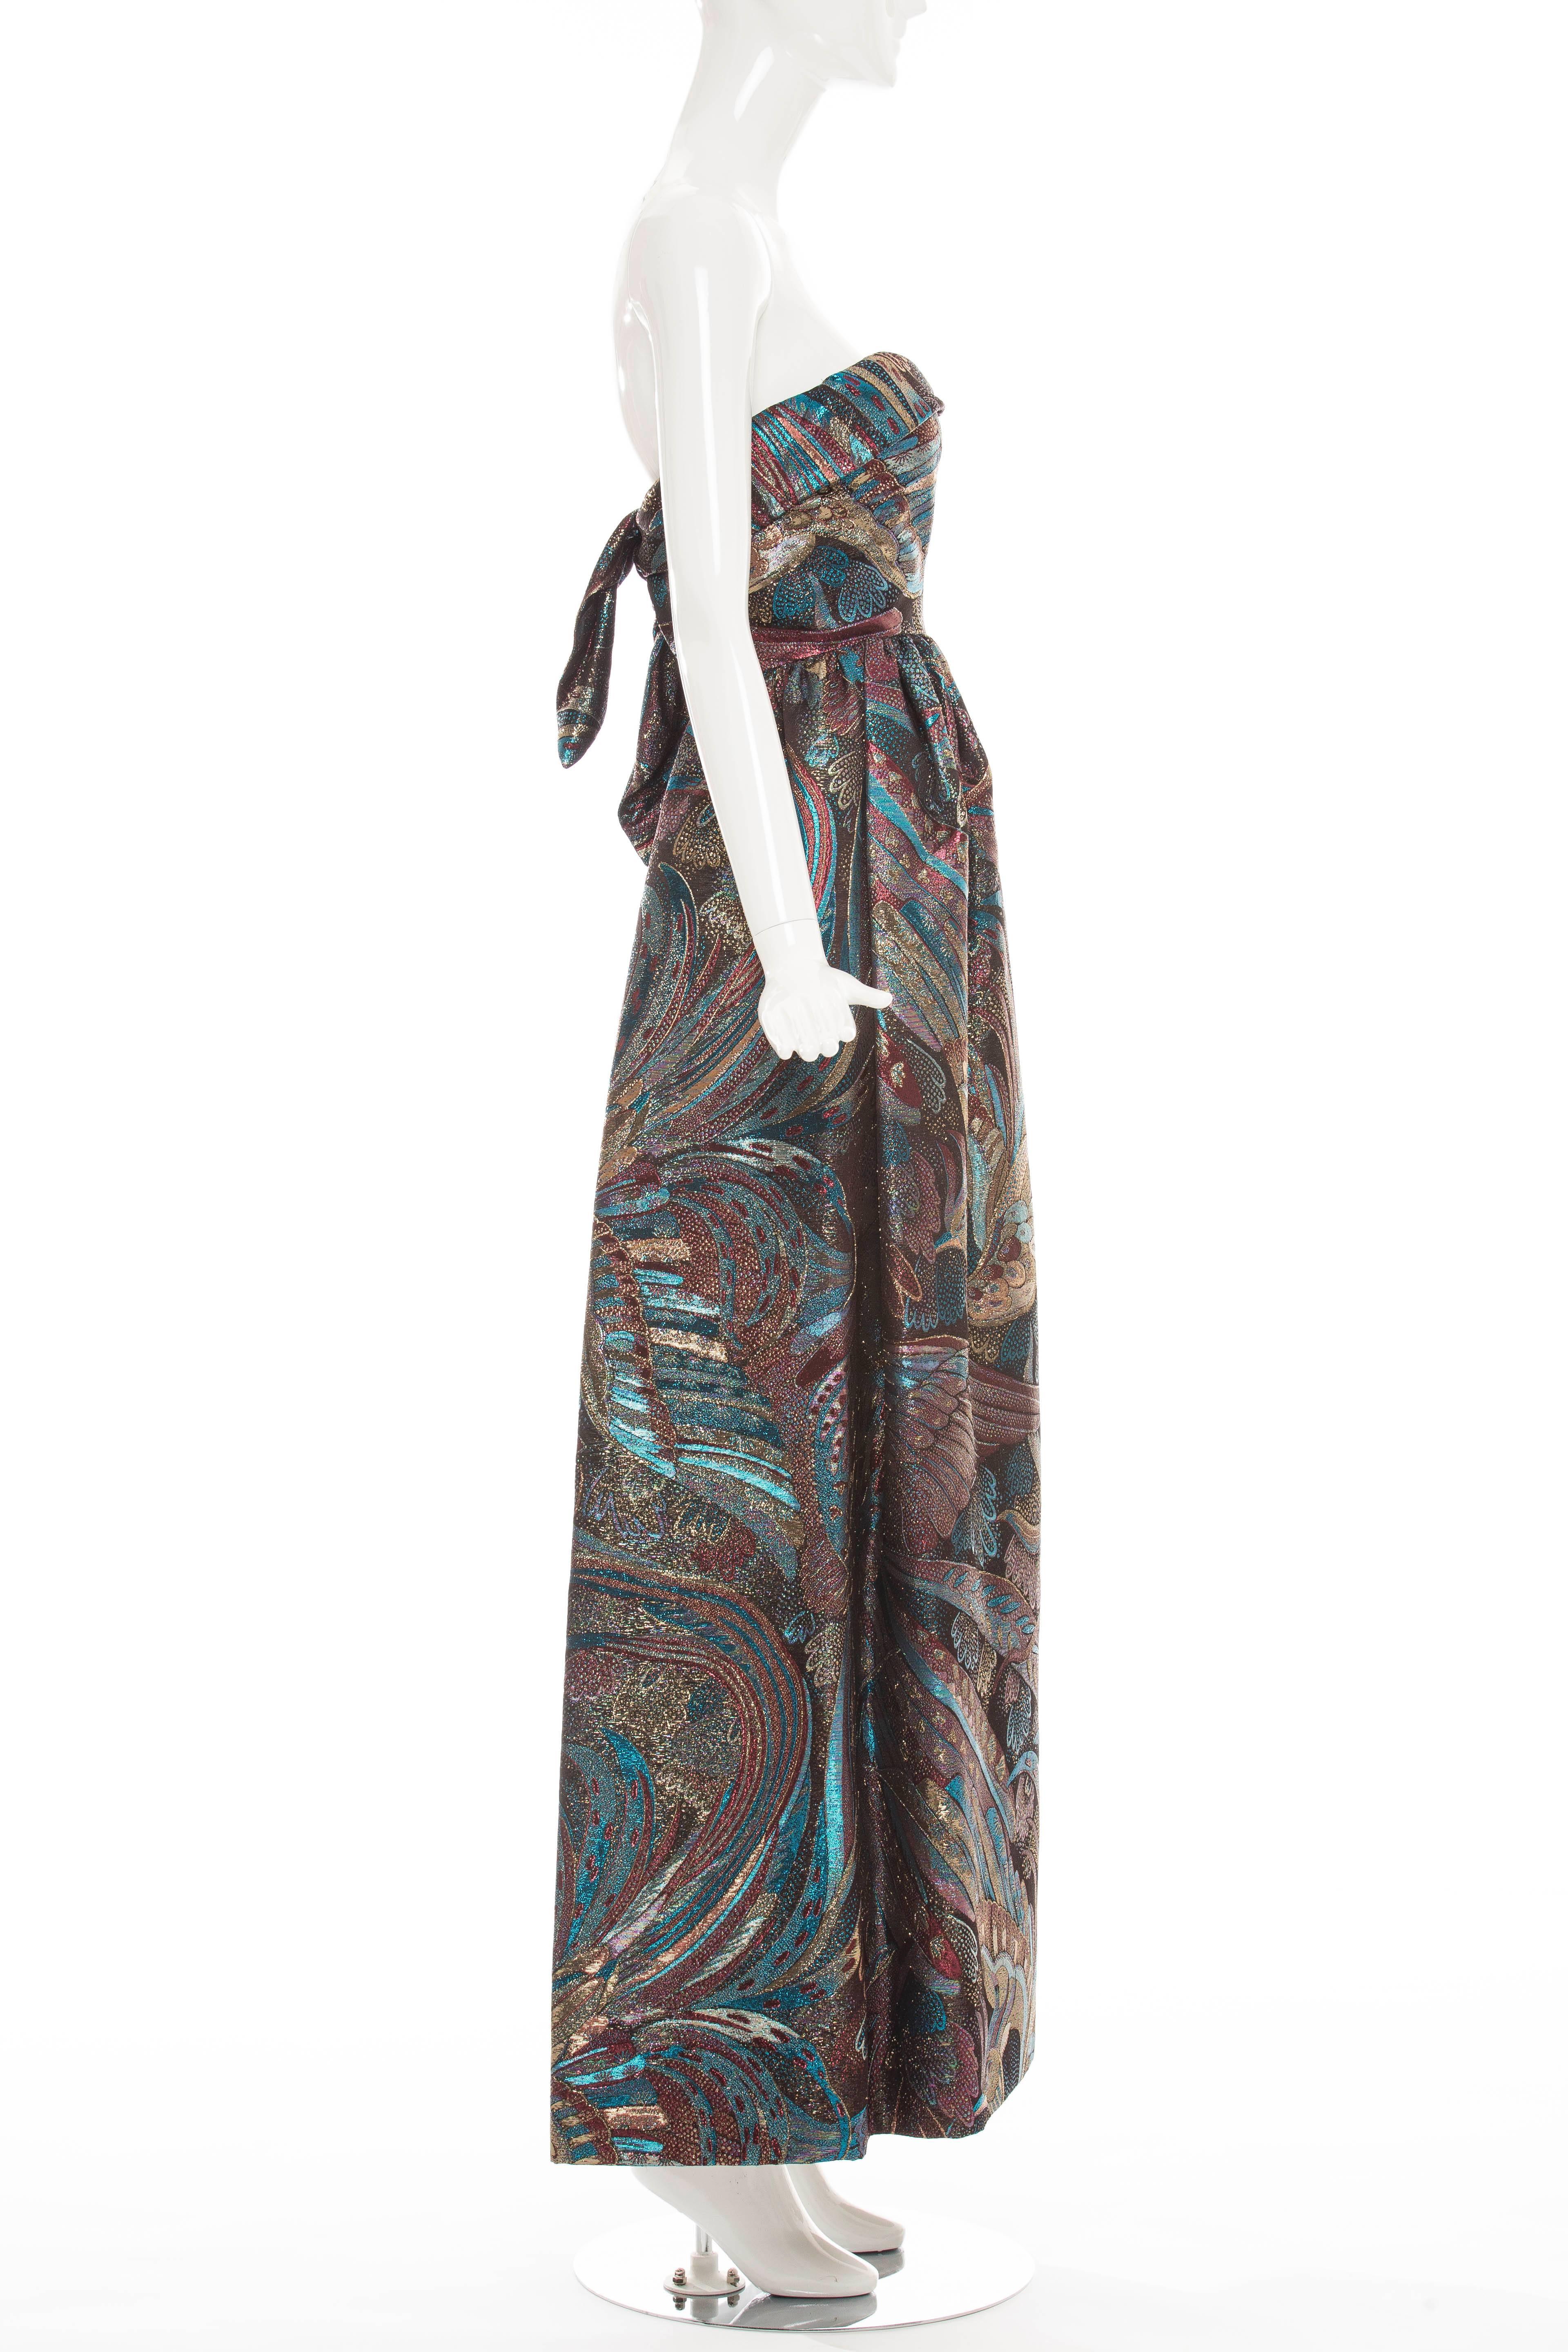 Women's Pauline Trigere Strapless Metallic Brocade Dress Circa 1960's